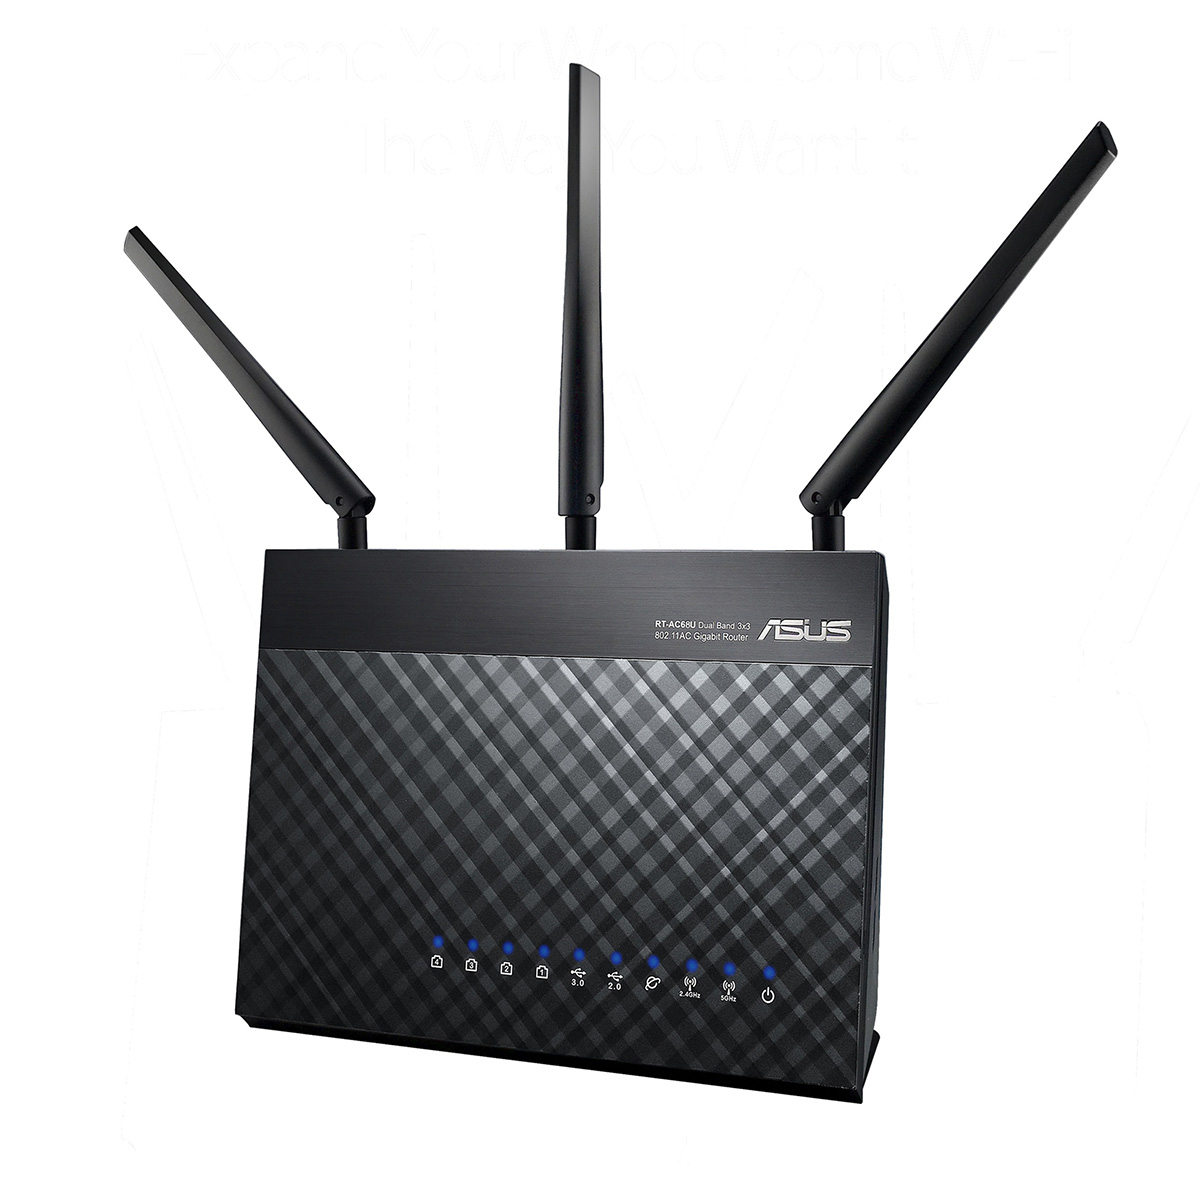 ASUS DSL-AC68U - Wireless Router - DSL-Modem